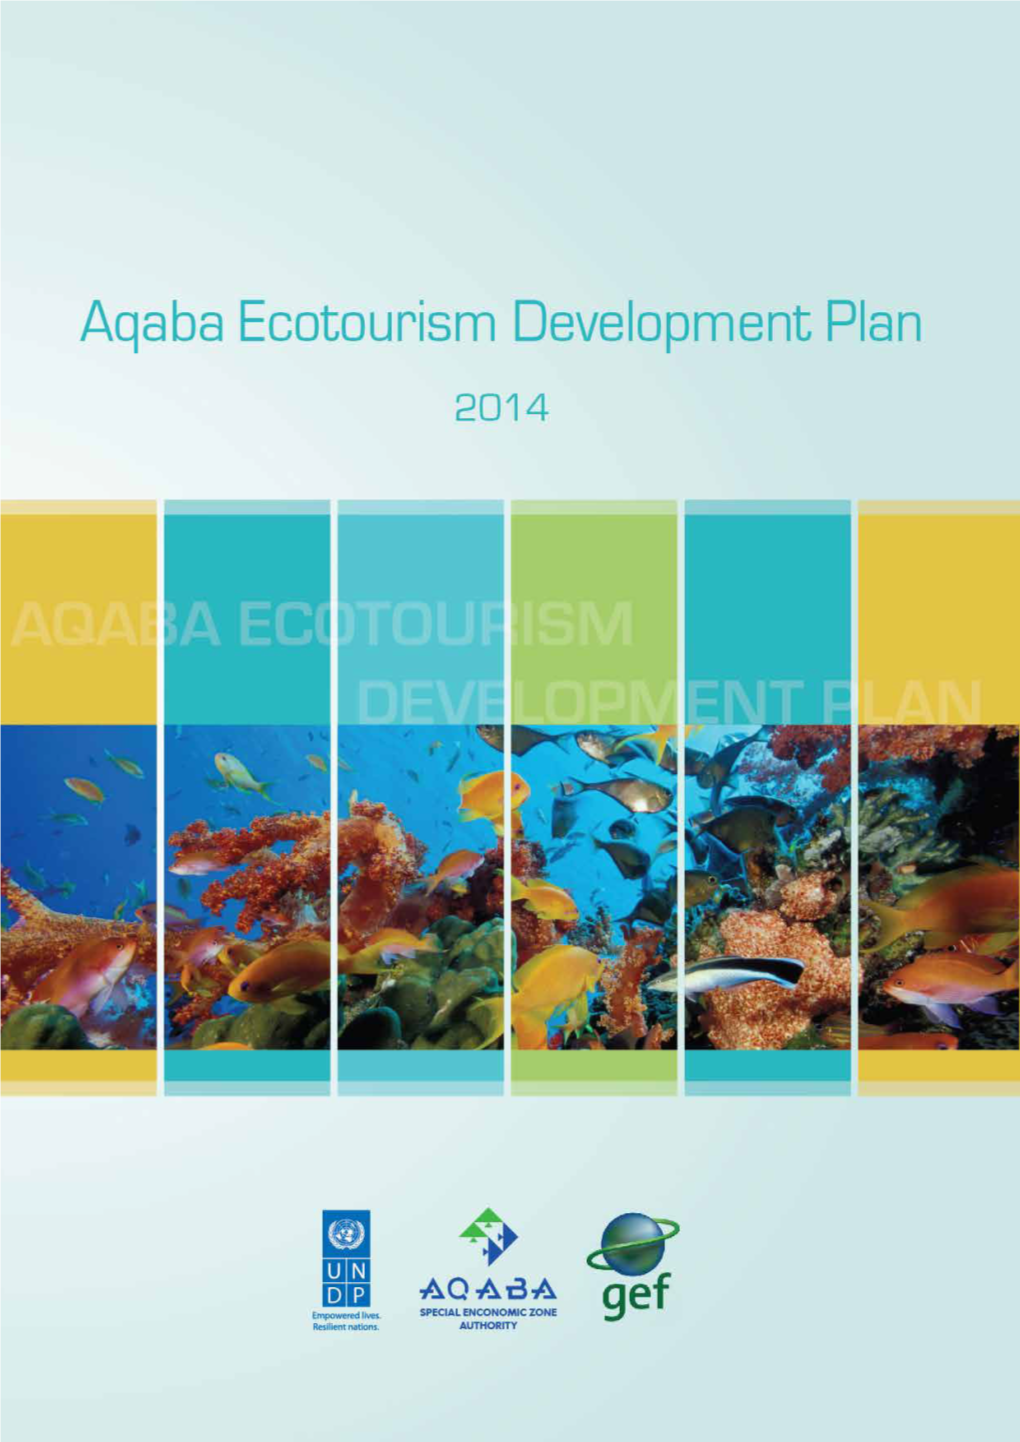 Aqaba Ecotourism Development Plan 2014